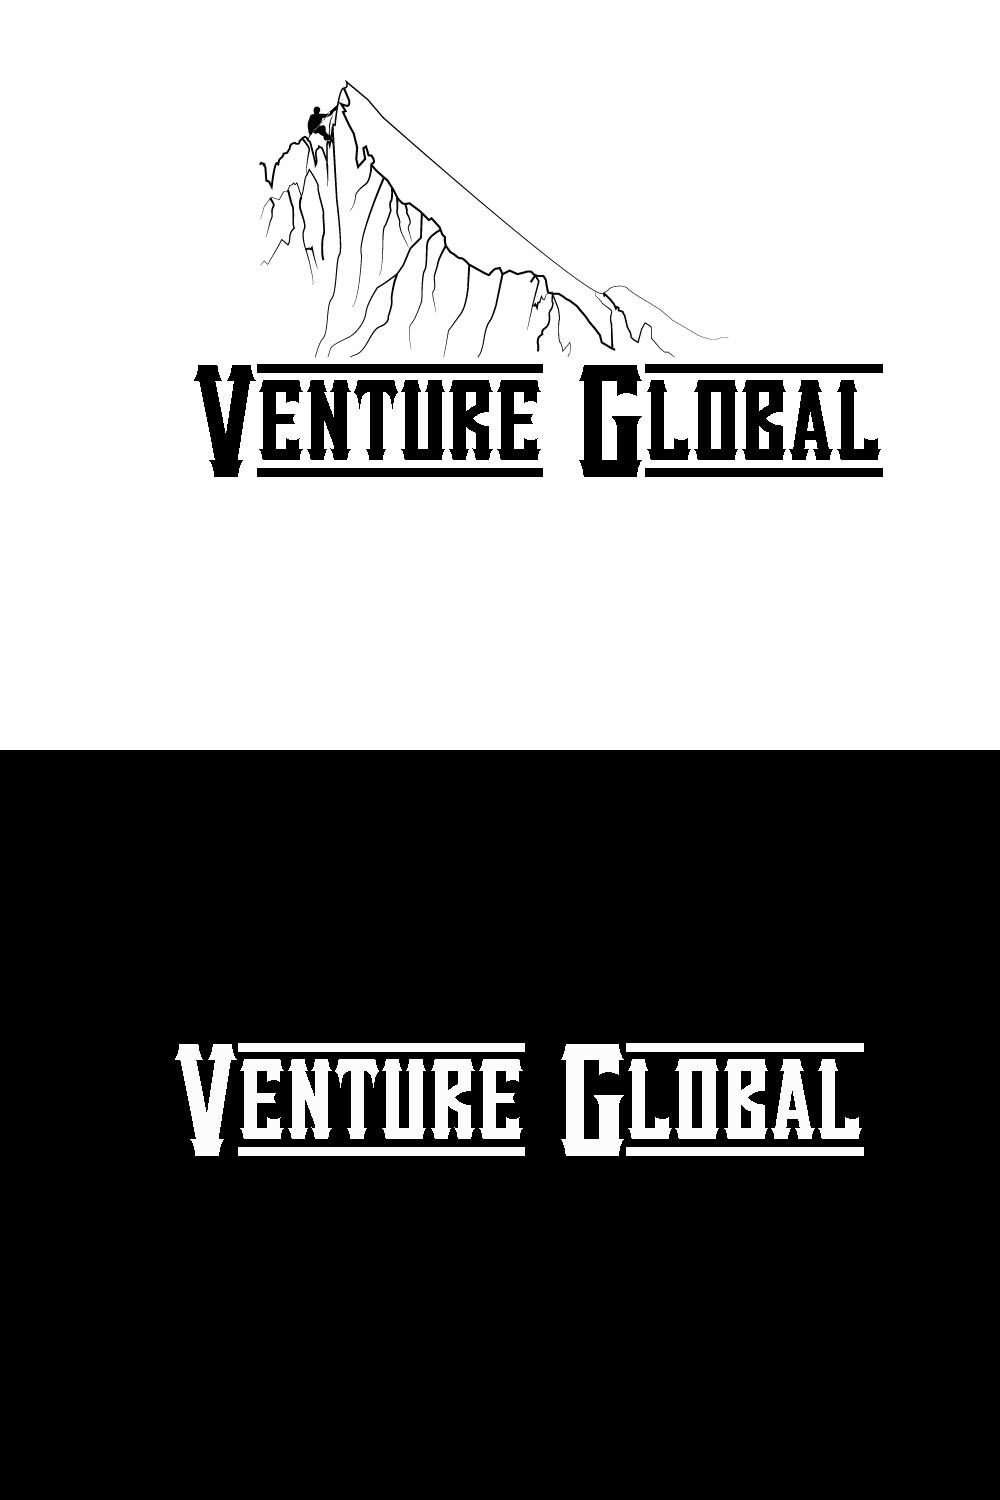 Venture Global pinterest preview image.